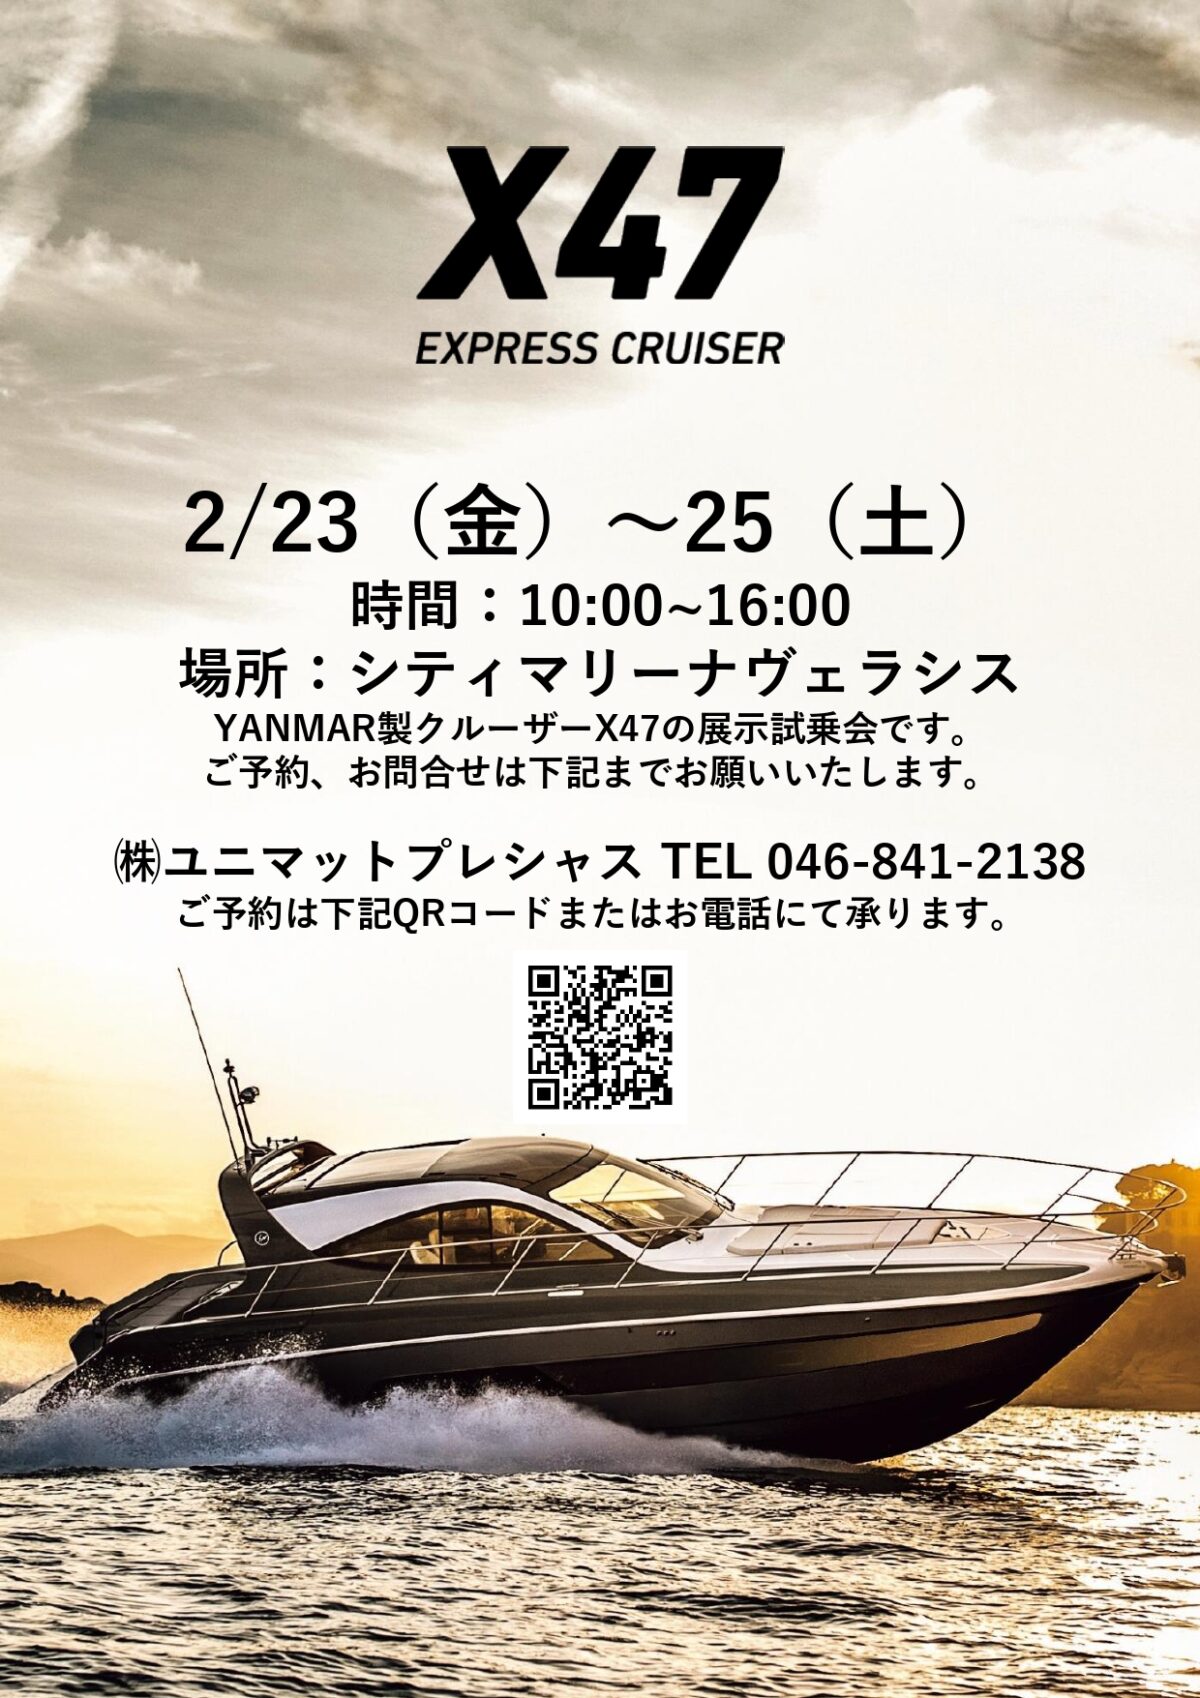 YANMAR X47 EXPRESS CRUISER展示試乗会を開催します！